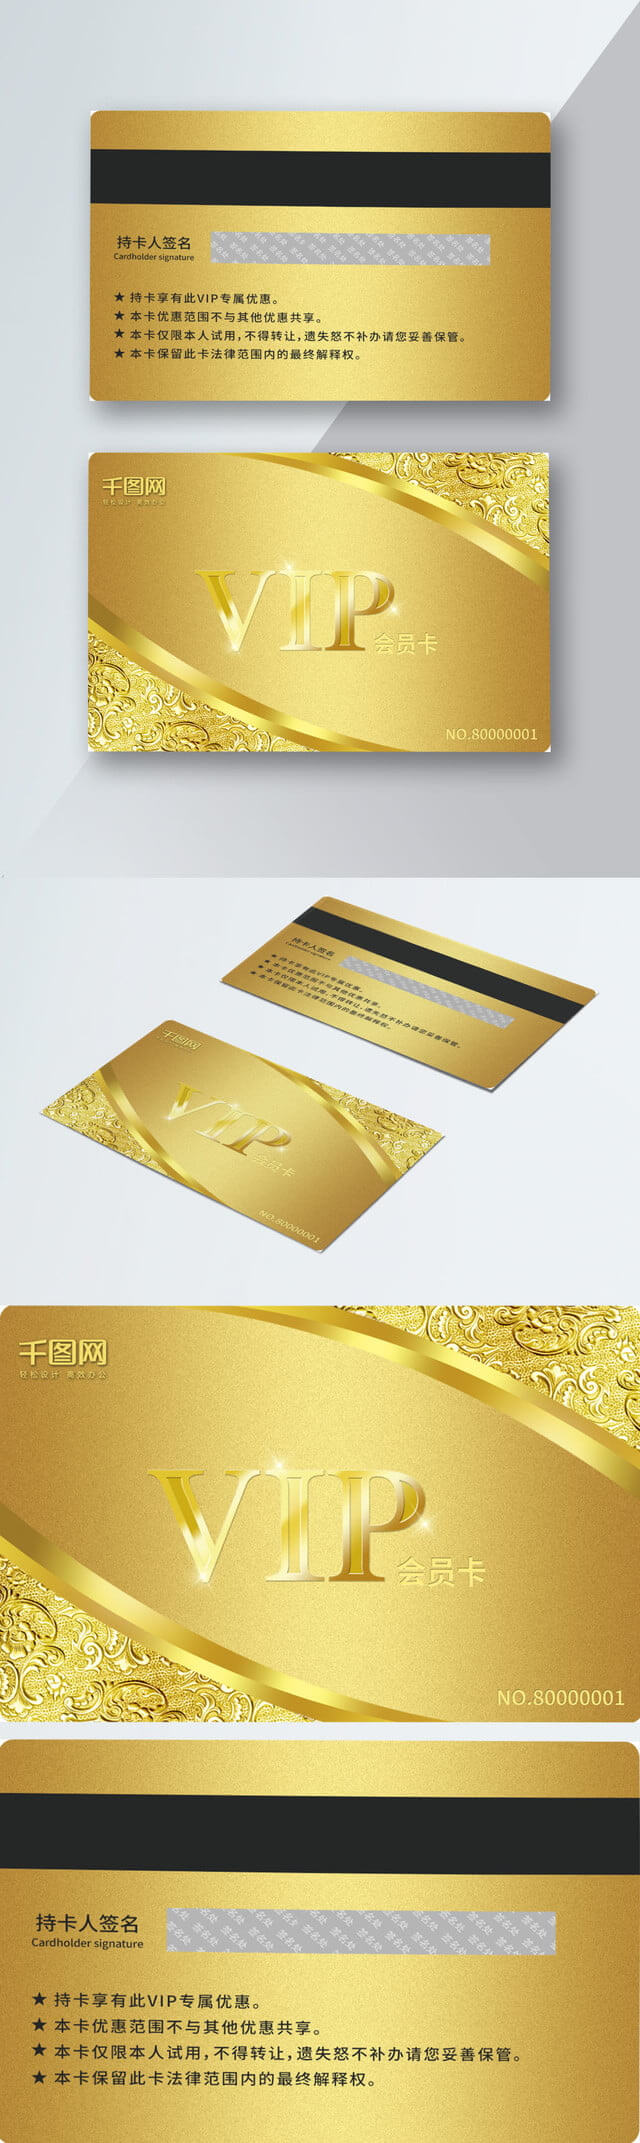 Membership Card Gold Card Vip Card Pvc Card Template For Regarding Pvc Card Template